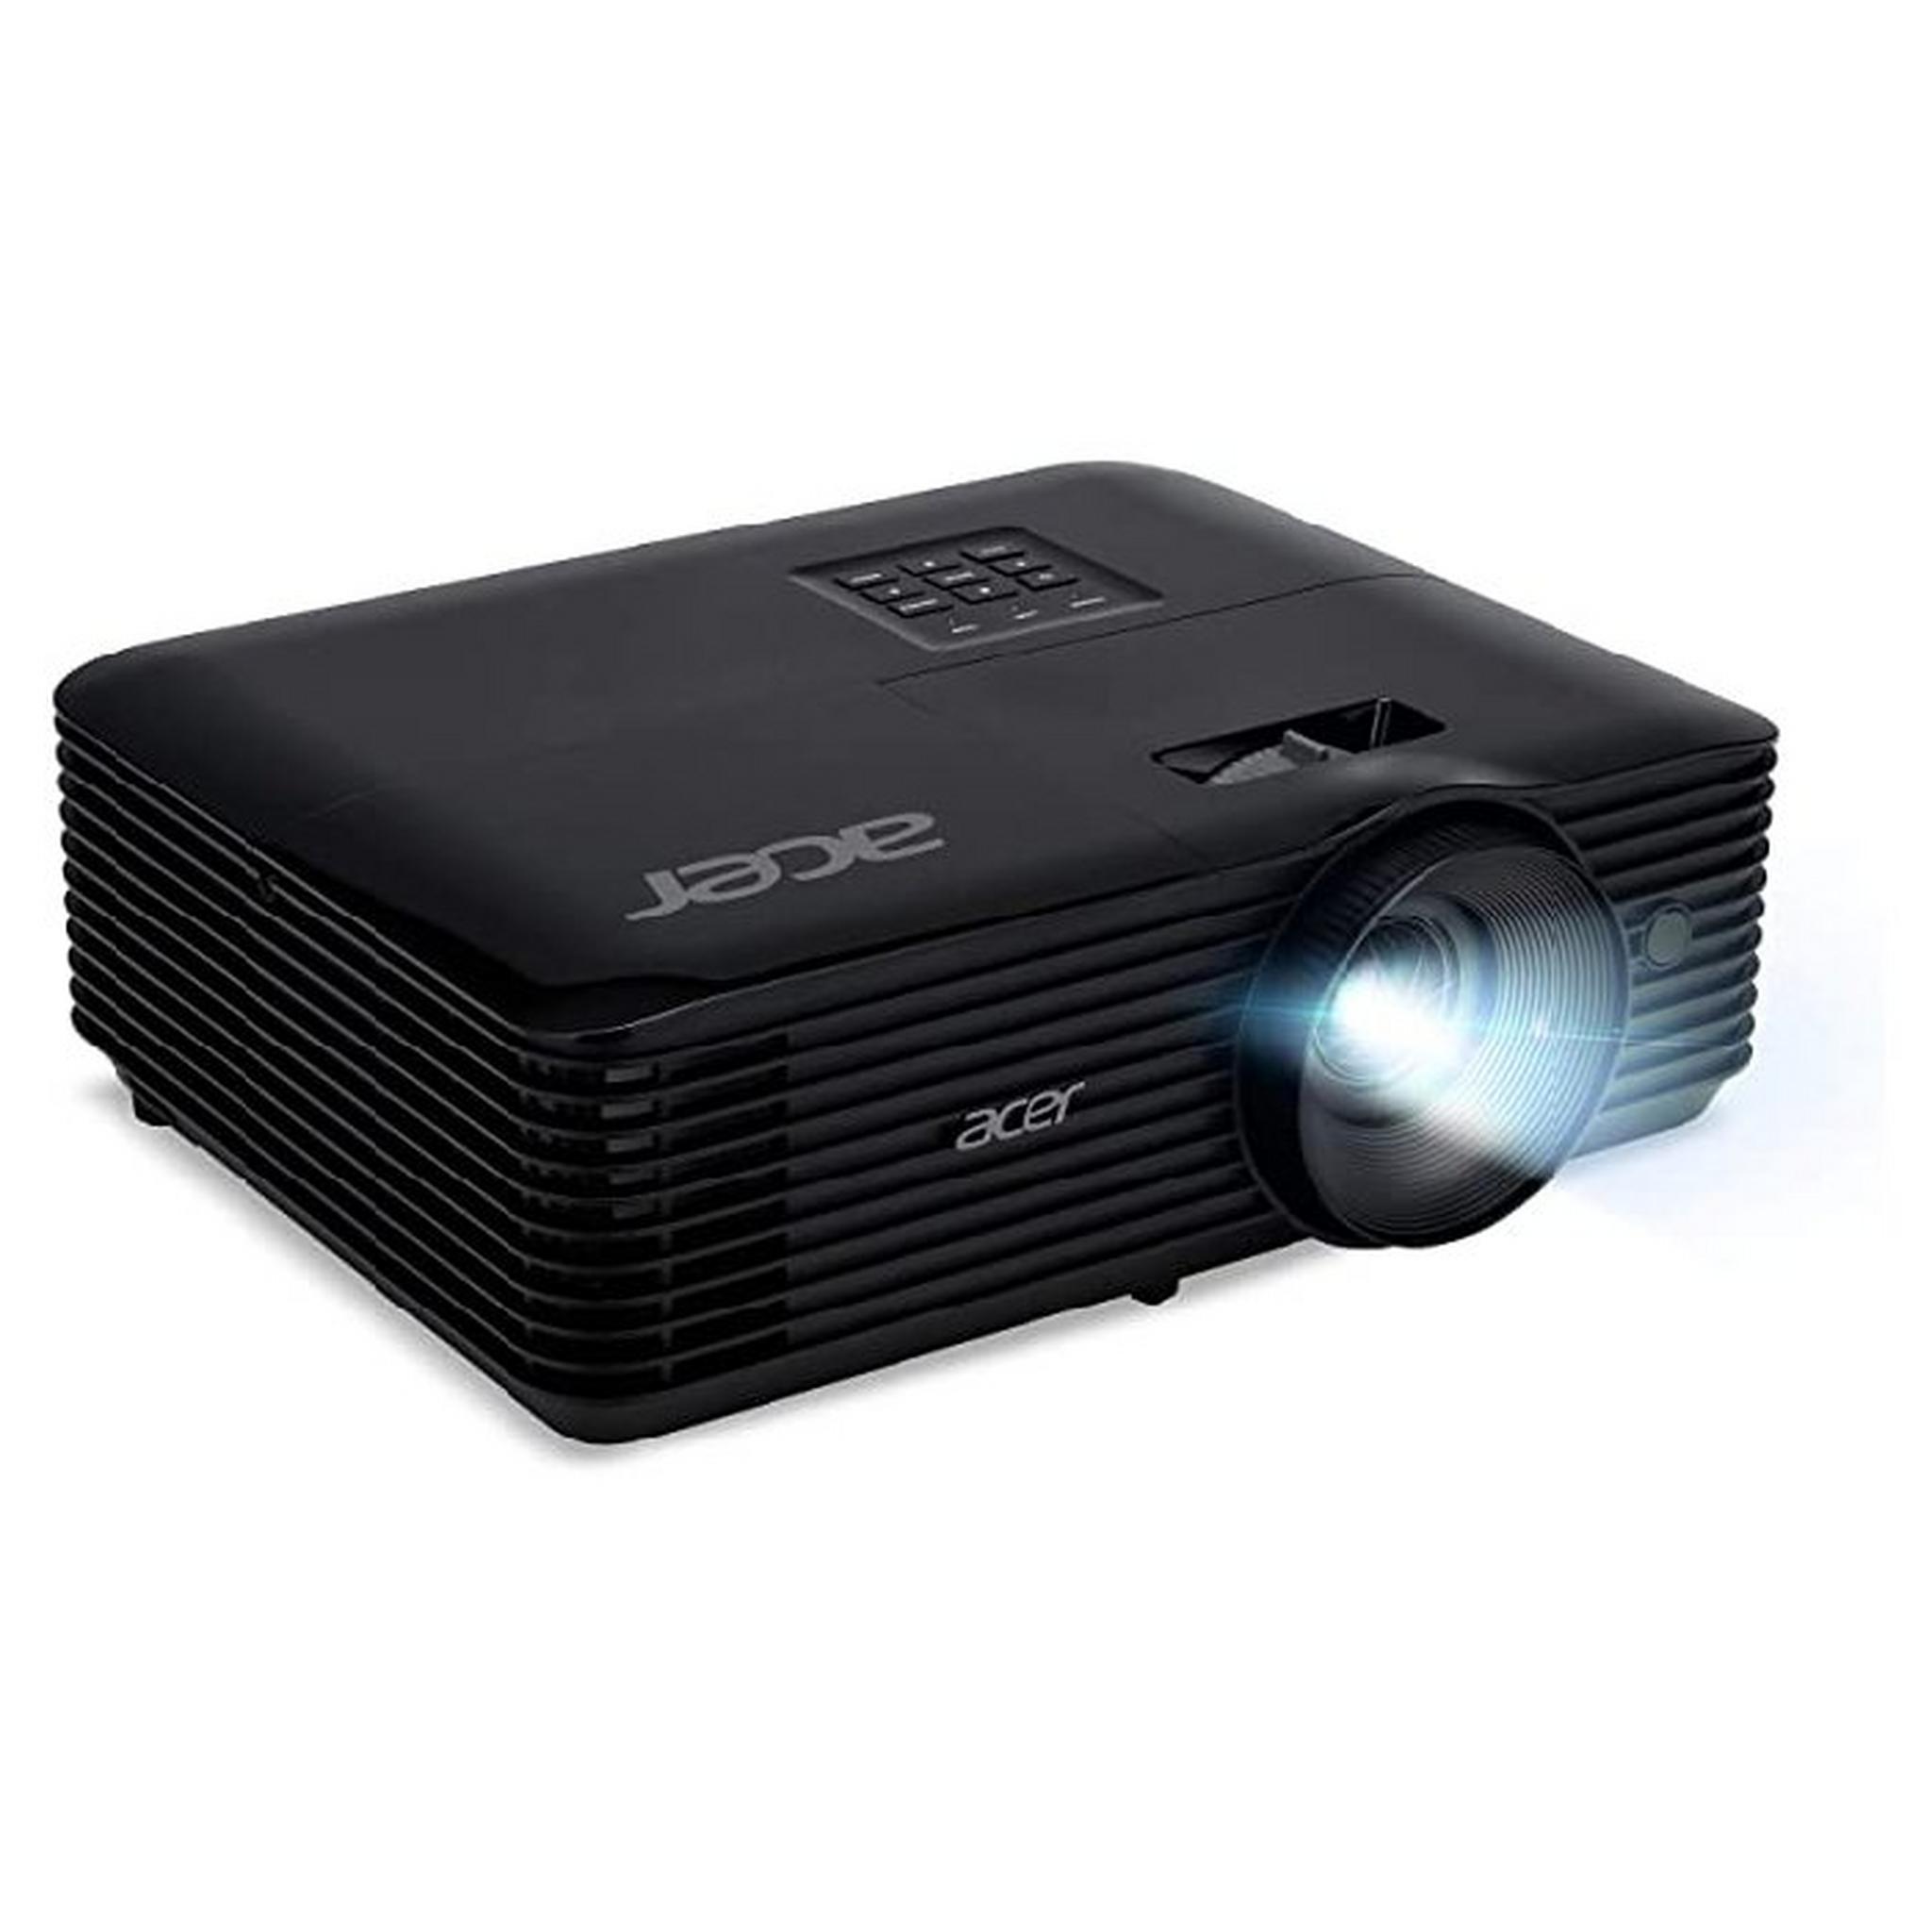 ACER X1326AWH DLP Projector, 4000 lumens, MR. JR911.002 – Black